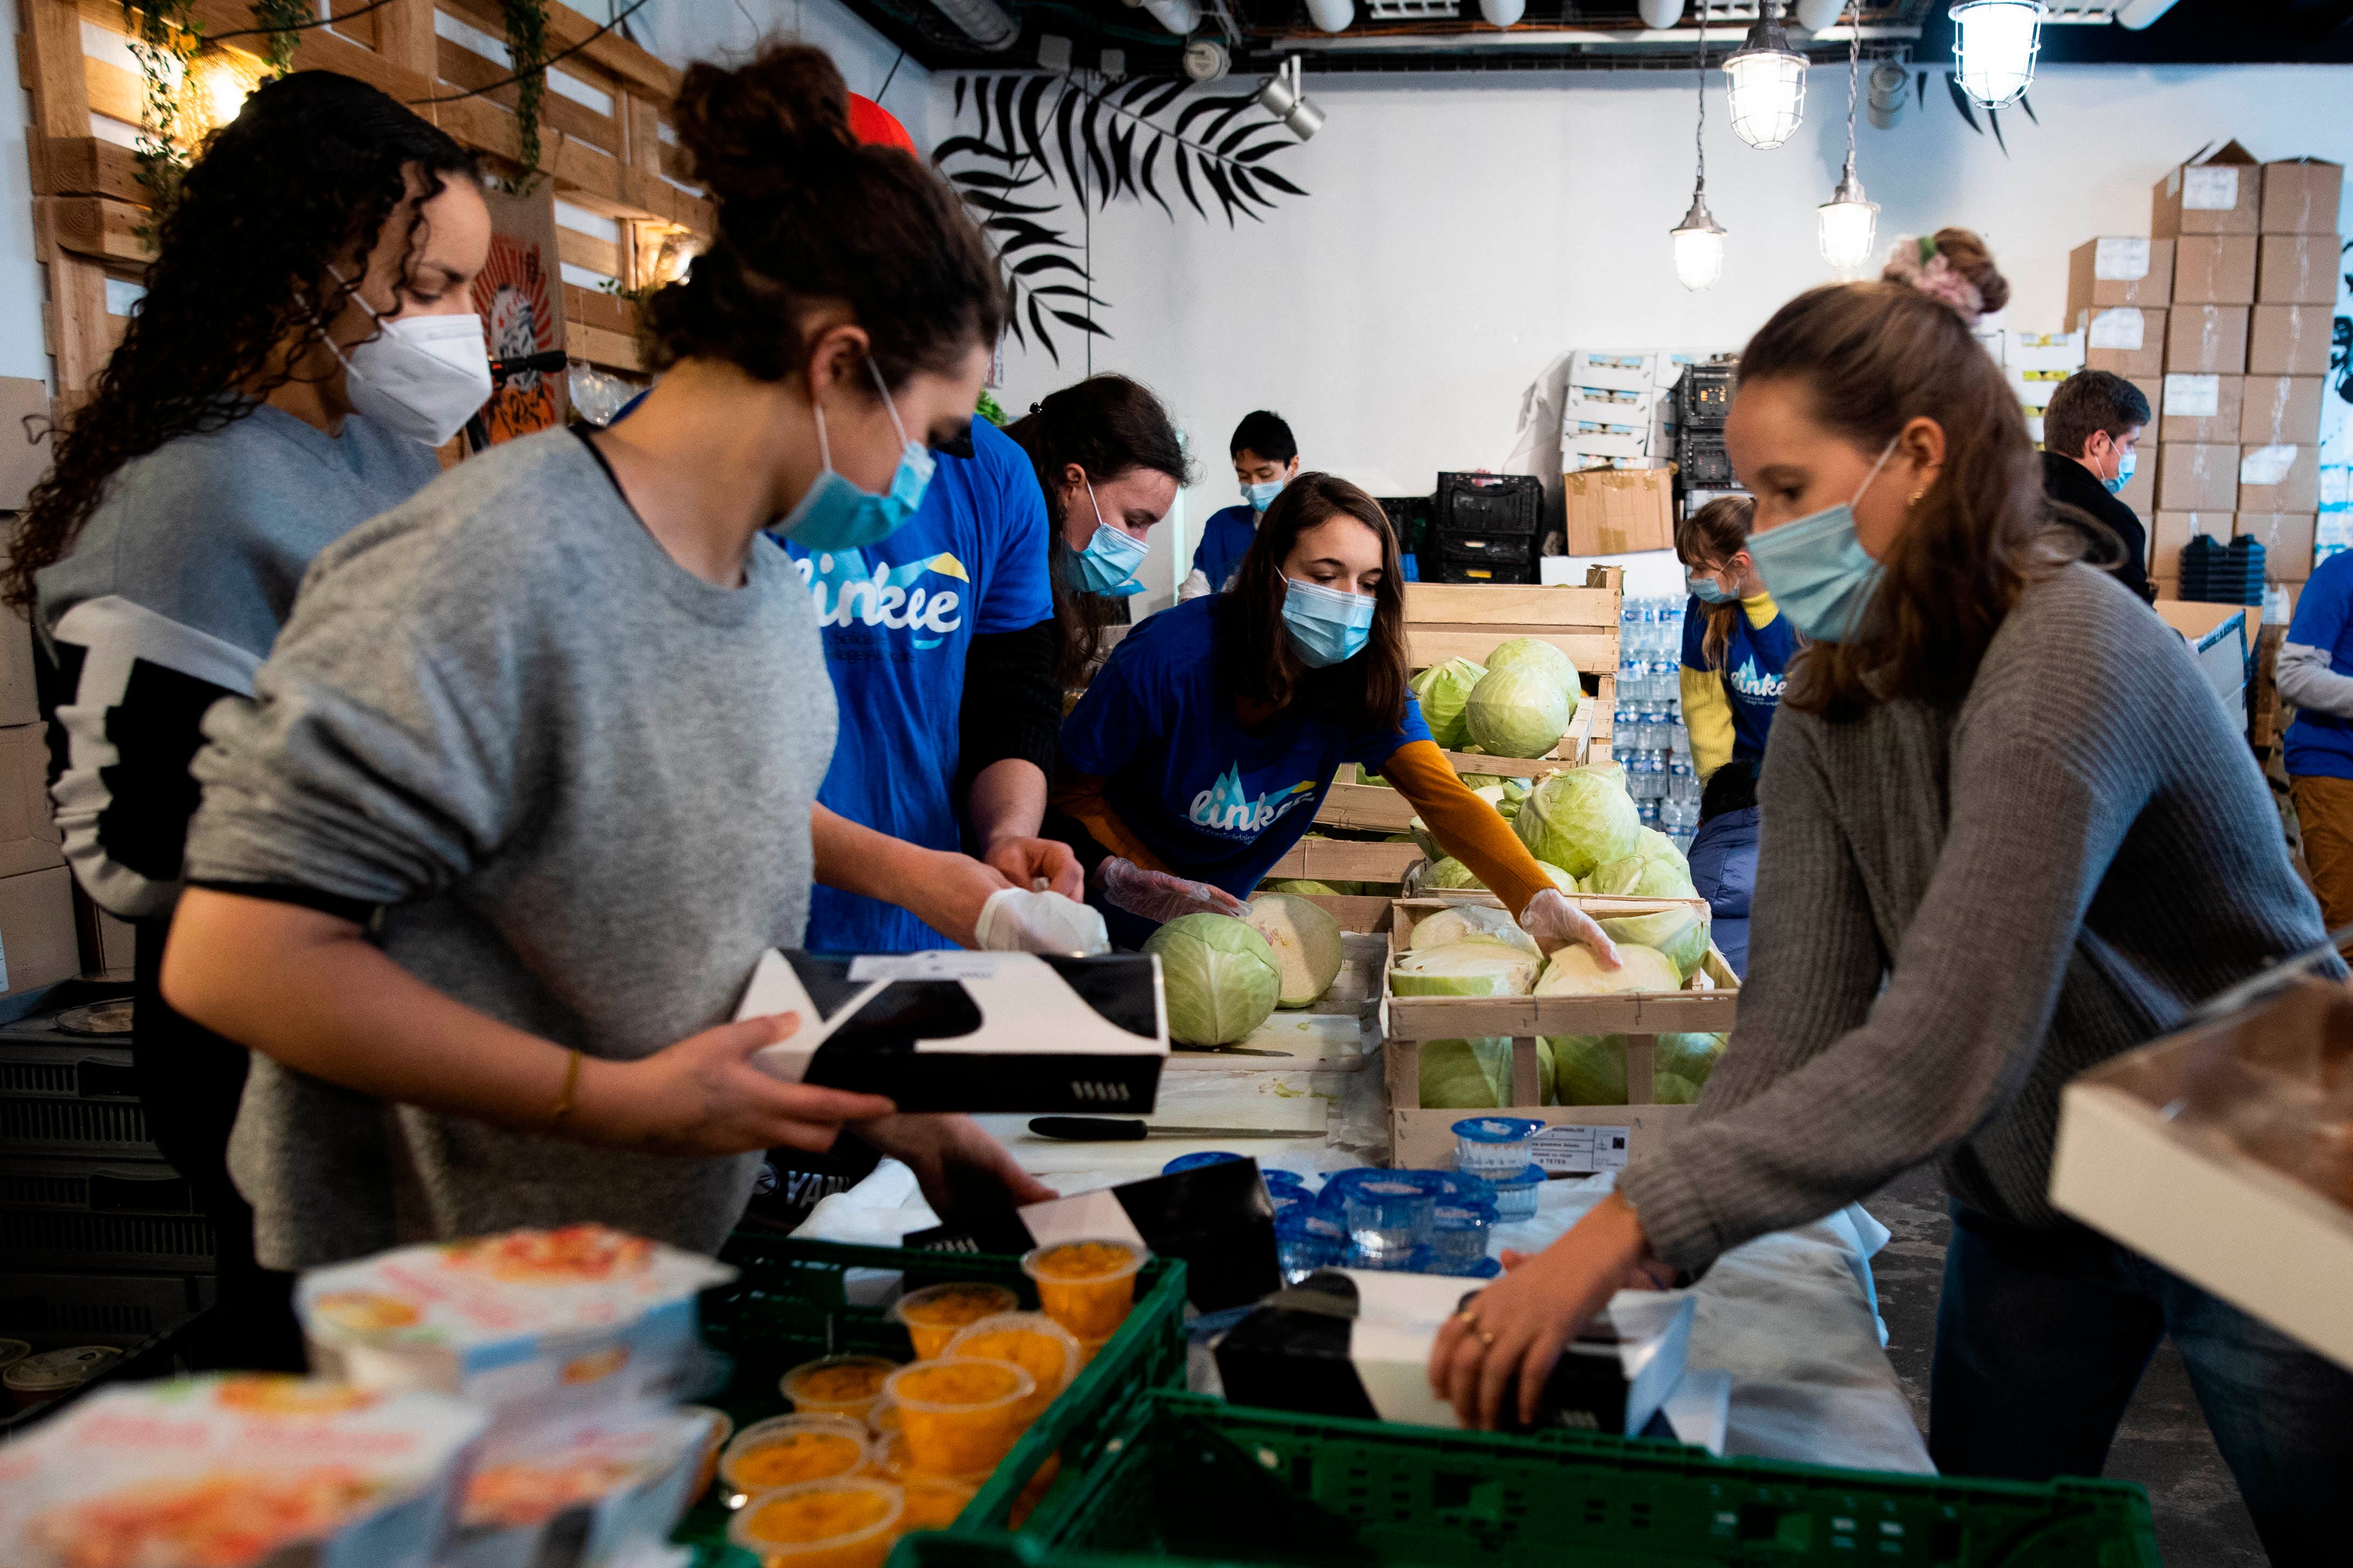 Volunteers of the Linkee association prepares food boxes for students in Paris